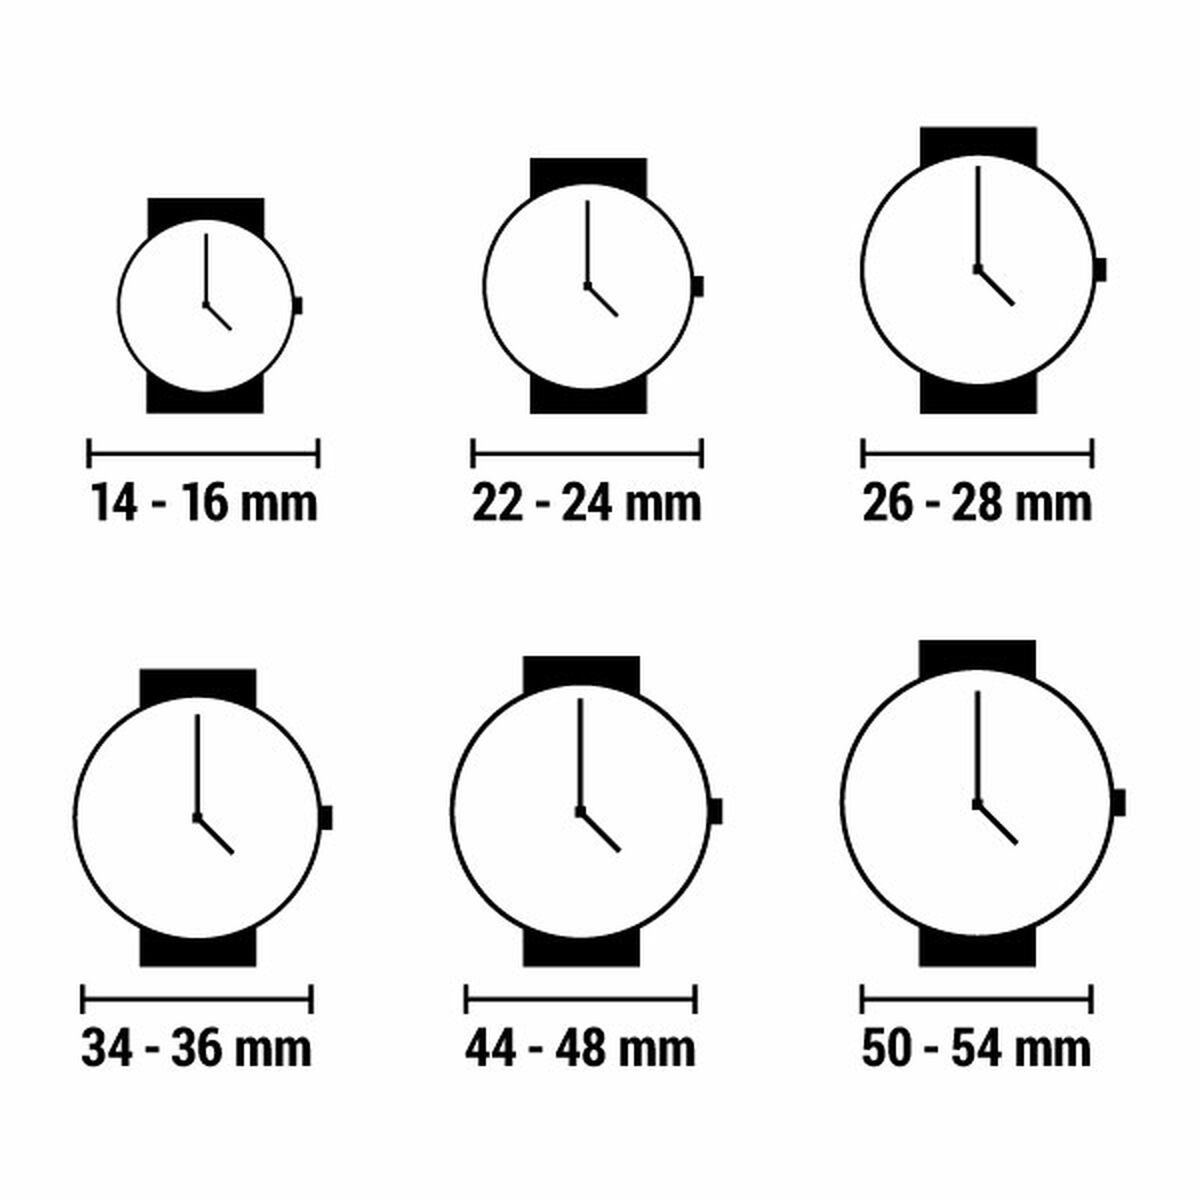 Horloge Dames CO88 Collection 8CW-10076